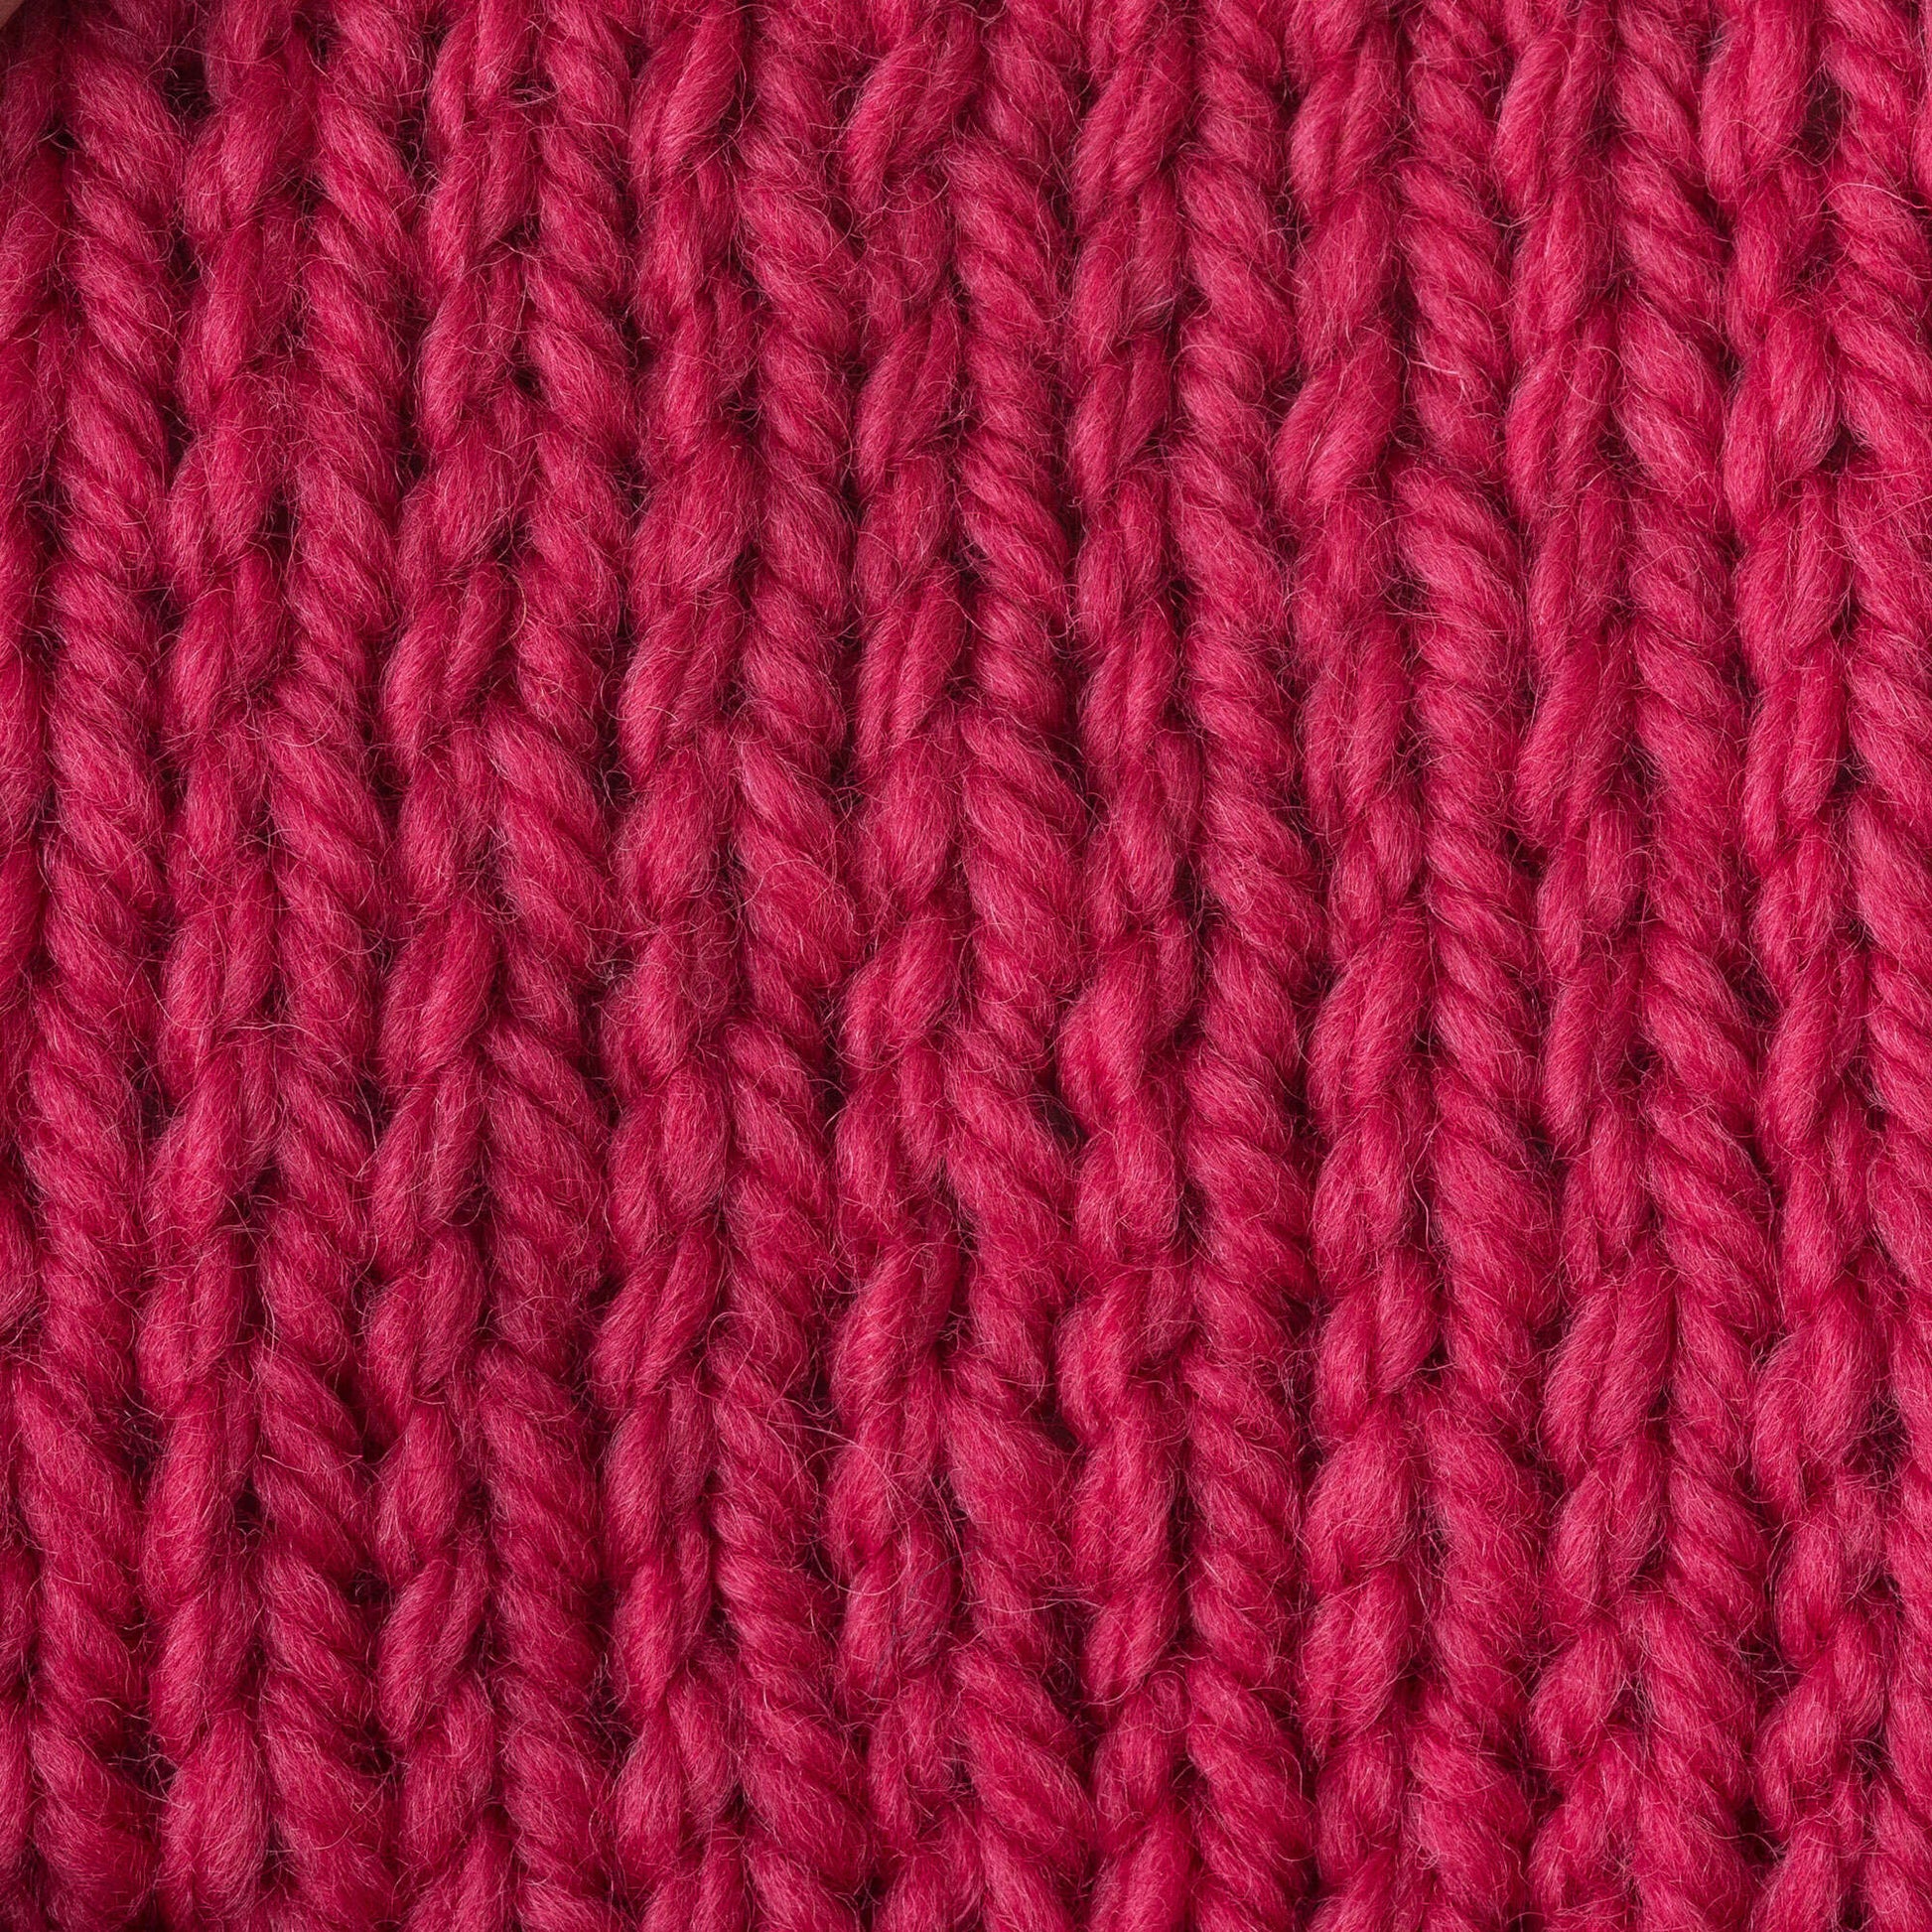 Patons Classic Wool Bulky Yarn - Discontinued Shades Deep Blush